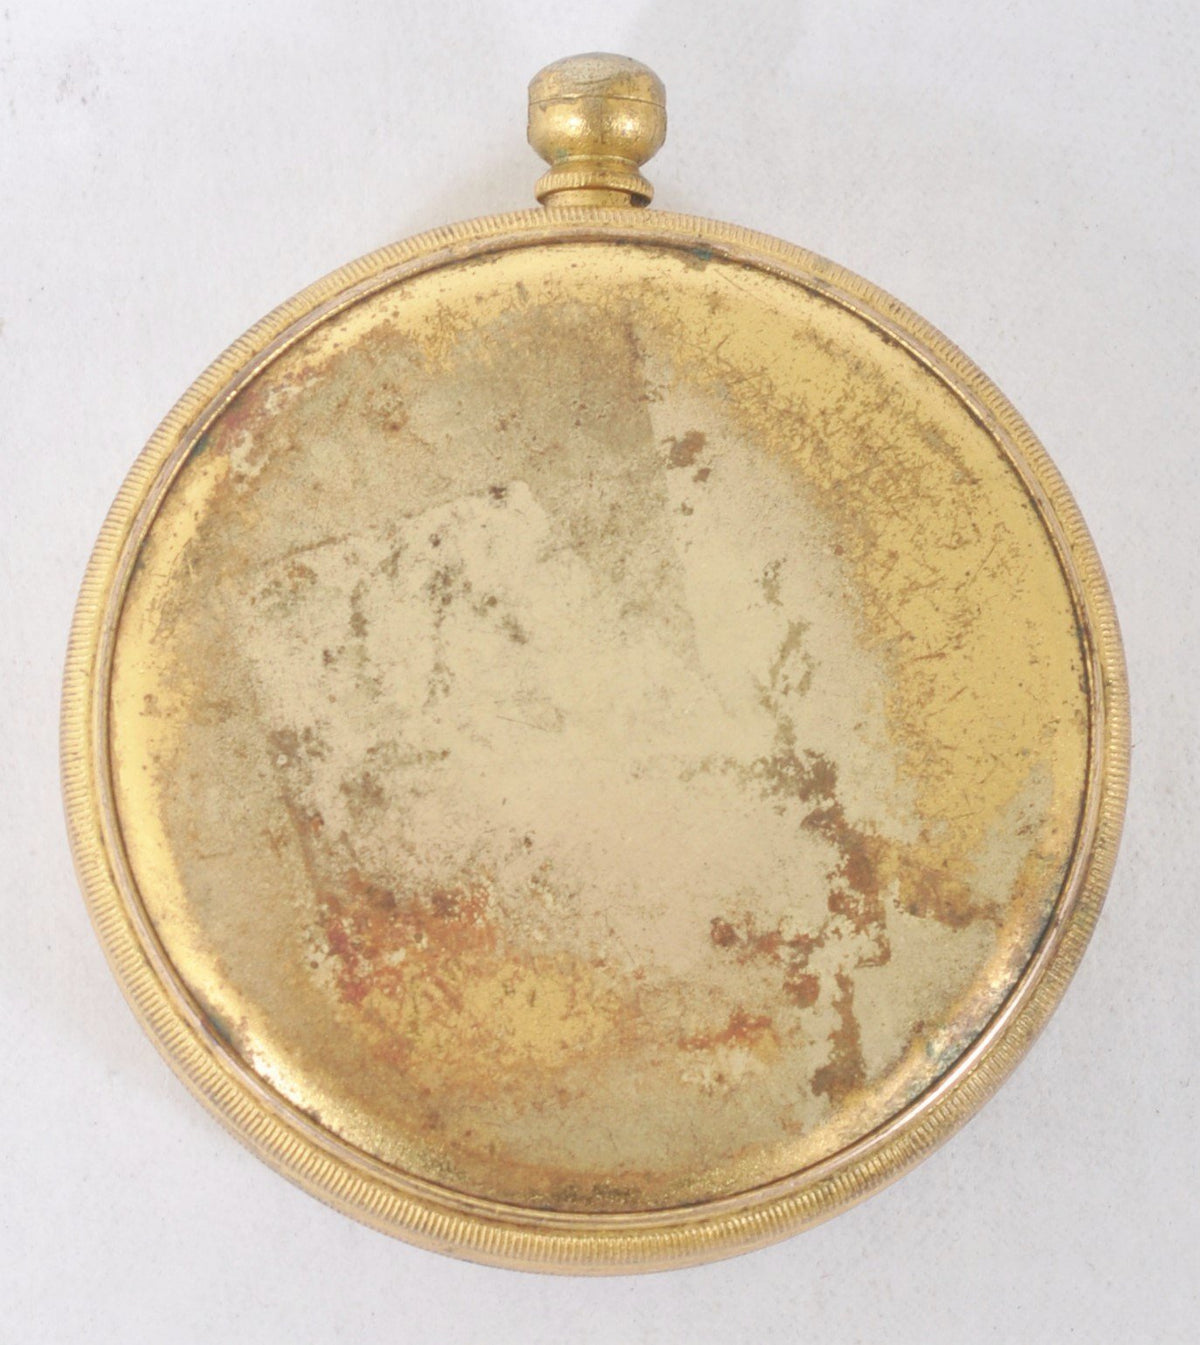 Negretti & Zambra of London Pocket Compass, Circa 1850